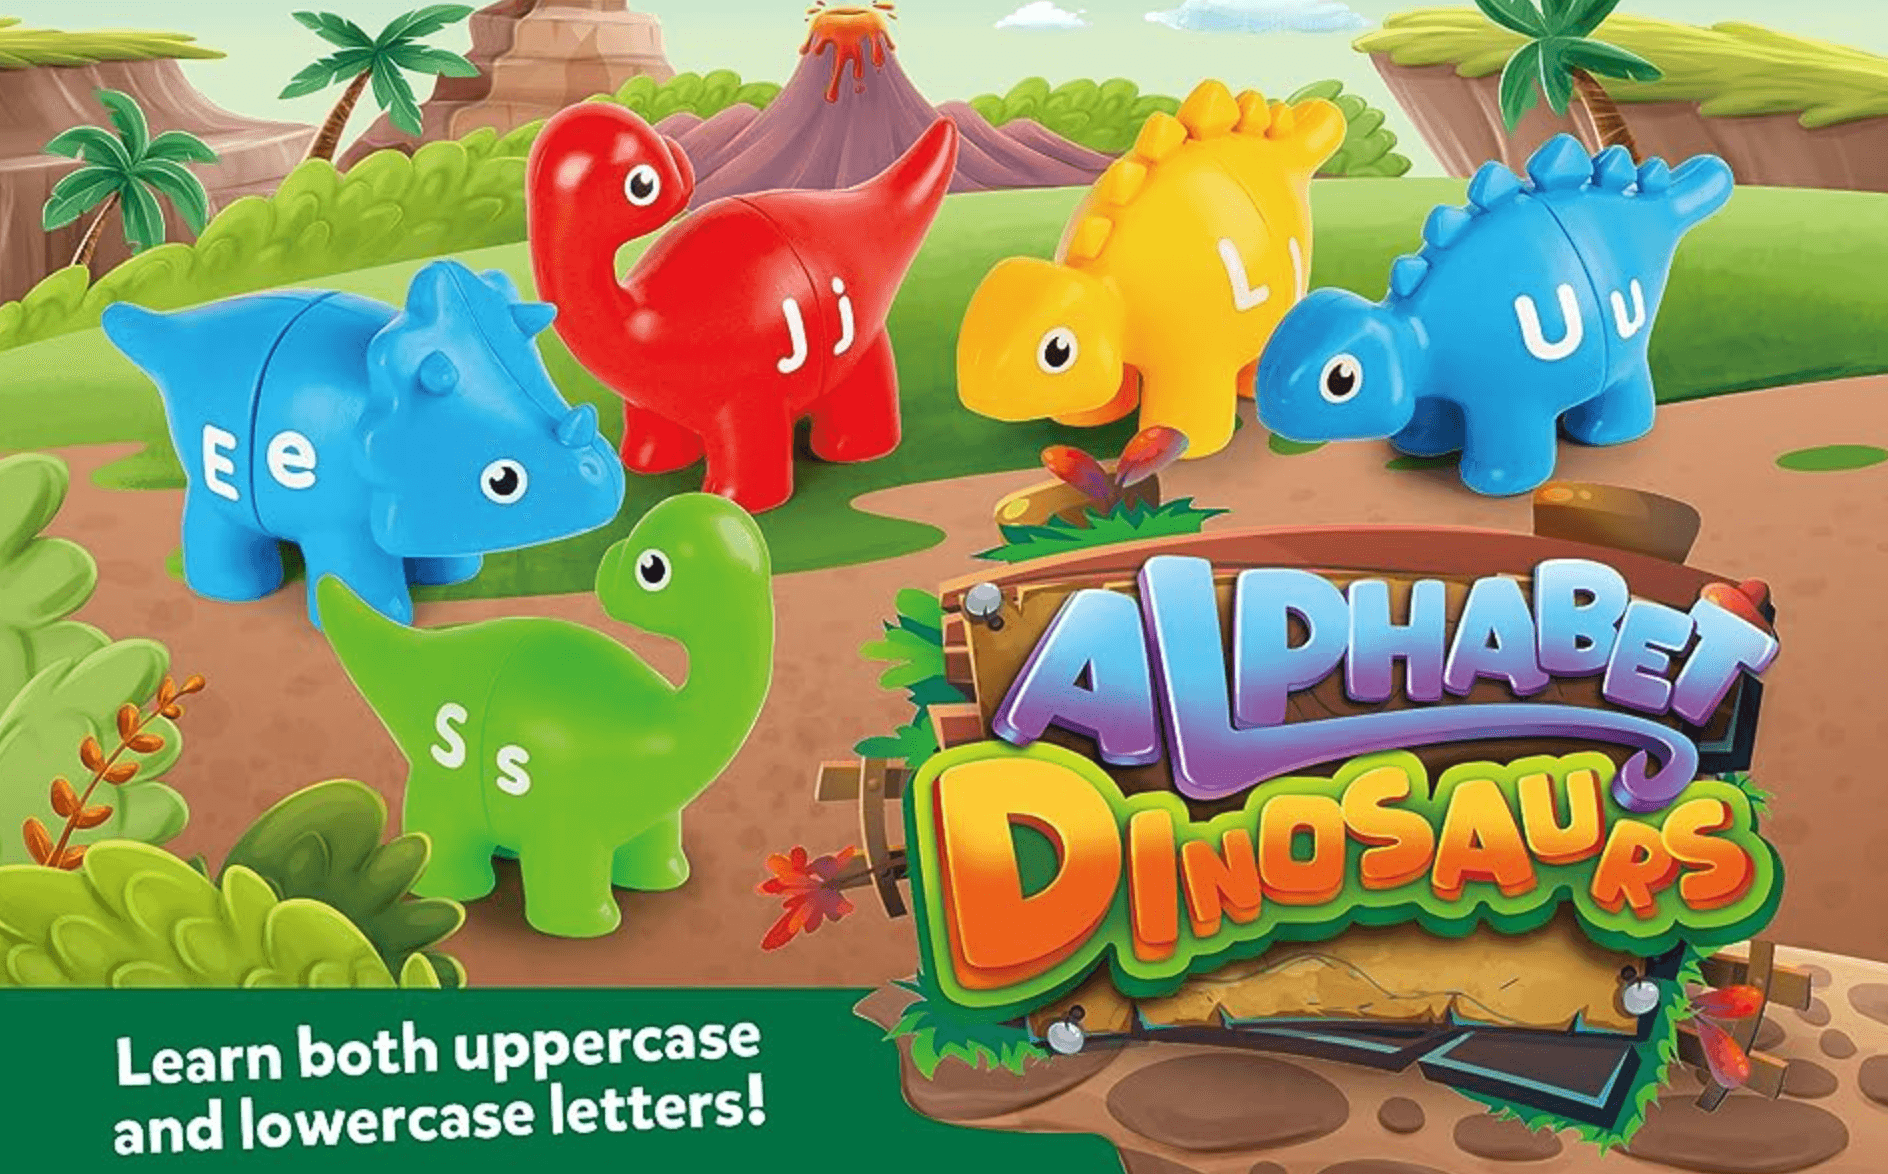 Alphabet Learning Dinosaur Matching Toys - Educational Montessori Toys - Taylorson